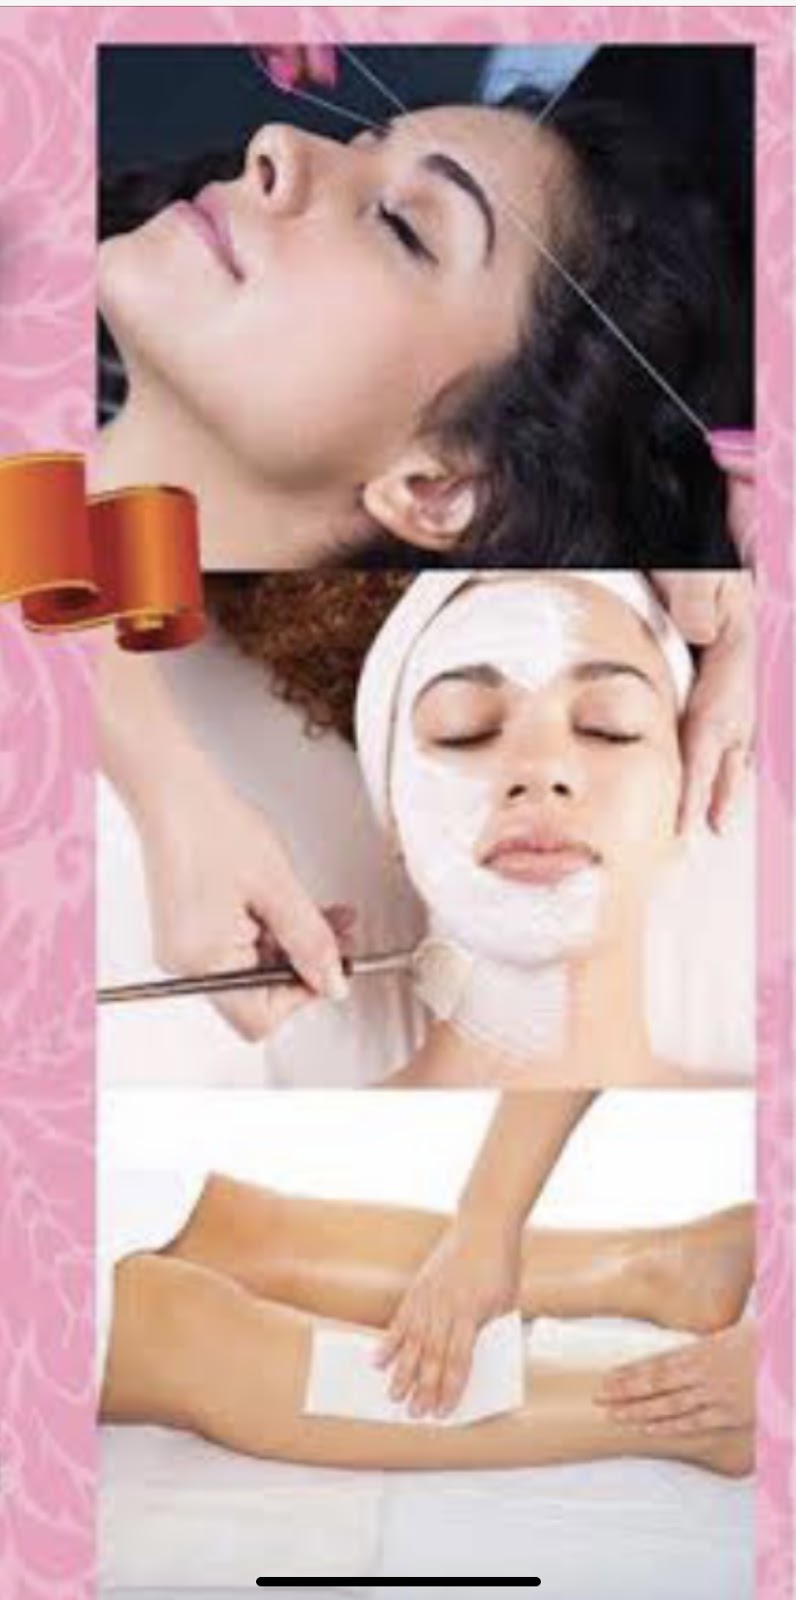 Silk Impressions | beauty salon | 69 Perry Rd, Werribee VIC 3030, Australia | 0490803587 OR +61 490 803 587